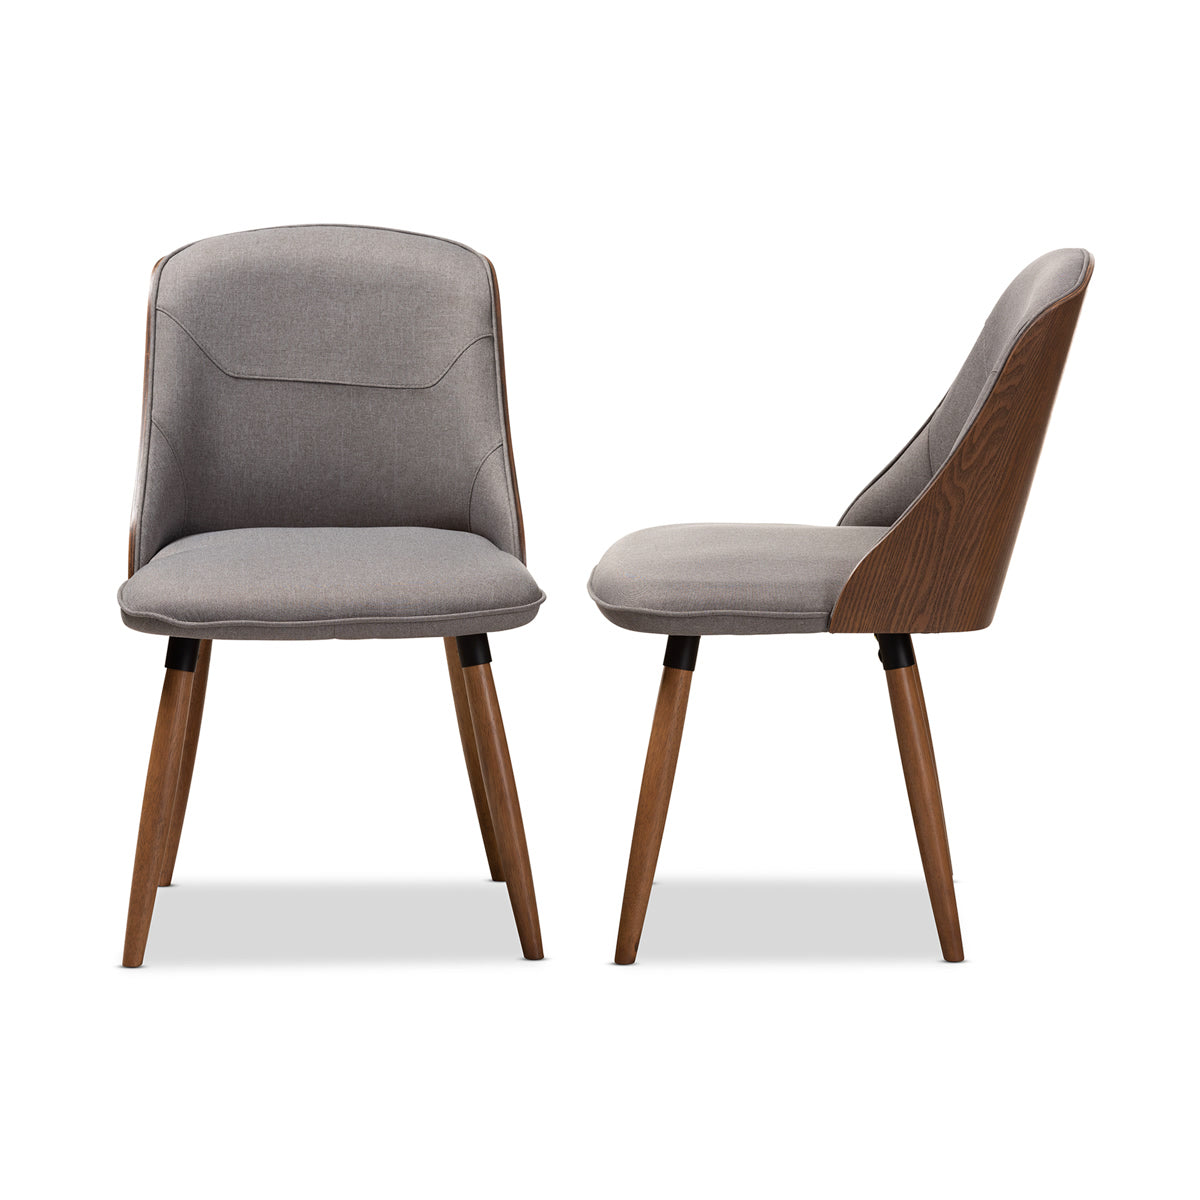 Baxton Studio Arsanio Mid-Century Modern Grey Fabric Upholstered Walnut Wood Finished Dining Chair Set of 2 Baxton Studio-dining chair-Minimal And Modern - 3